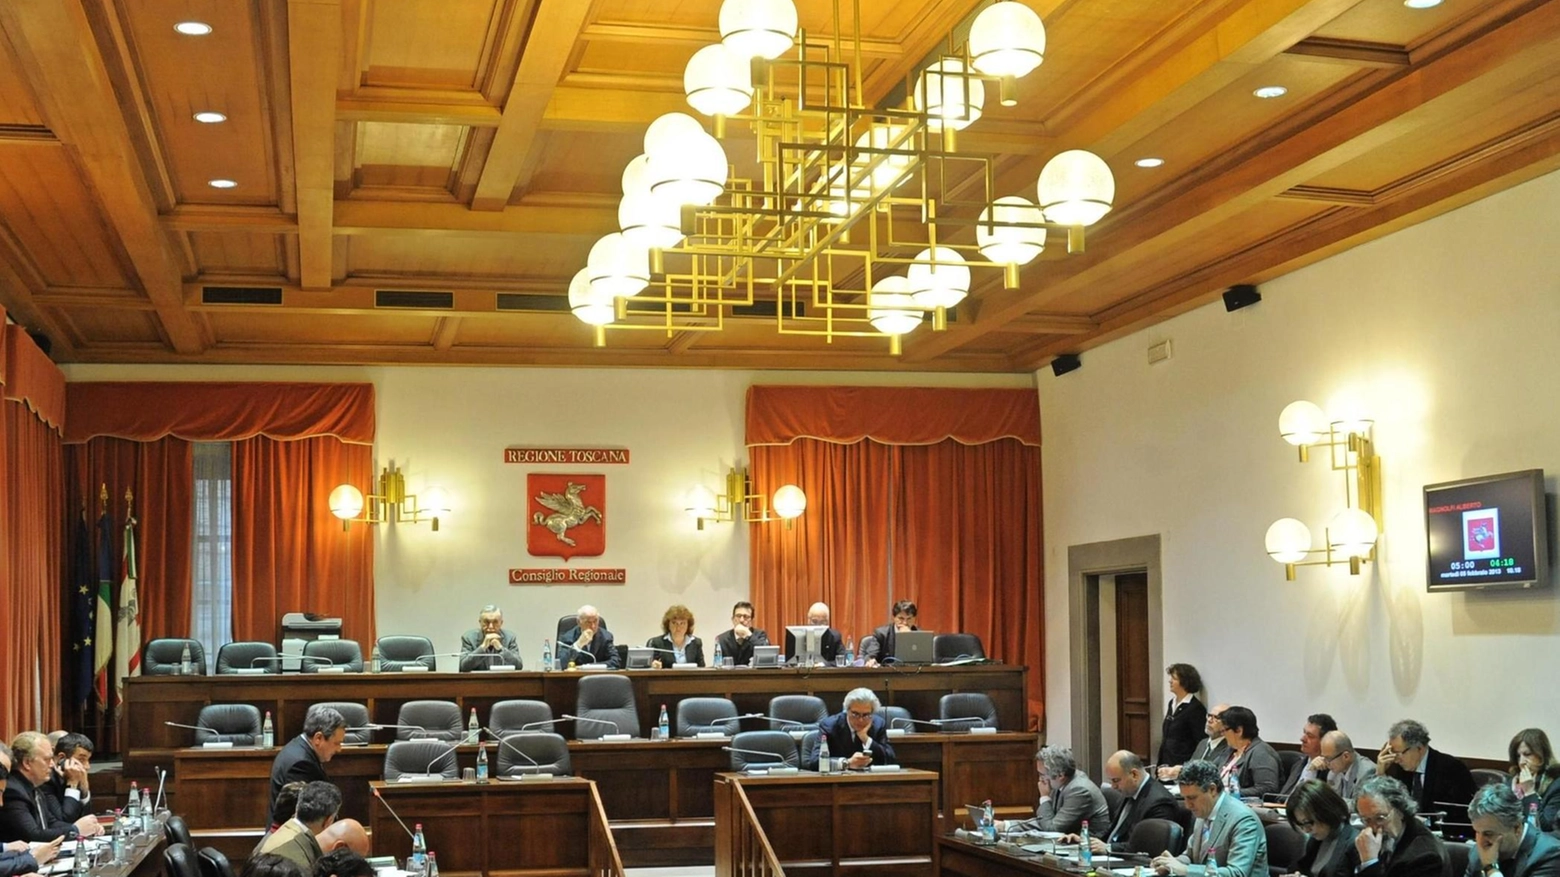 La sede del Consiglio regionale della Toscana (foto repertorio)